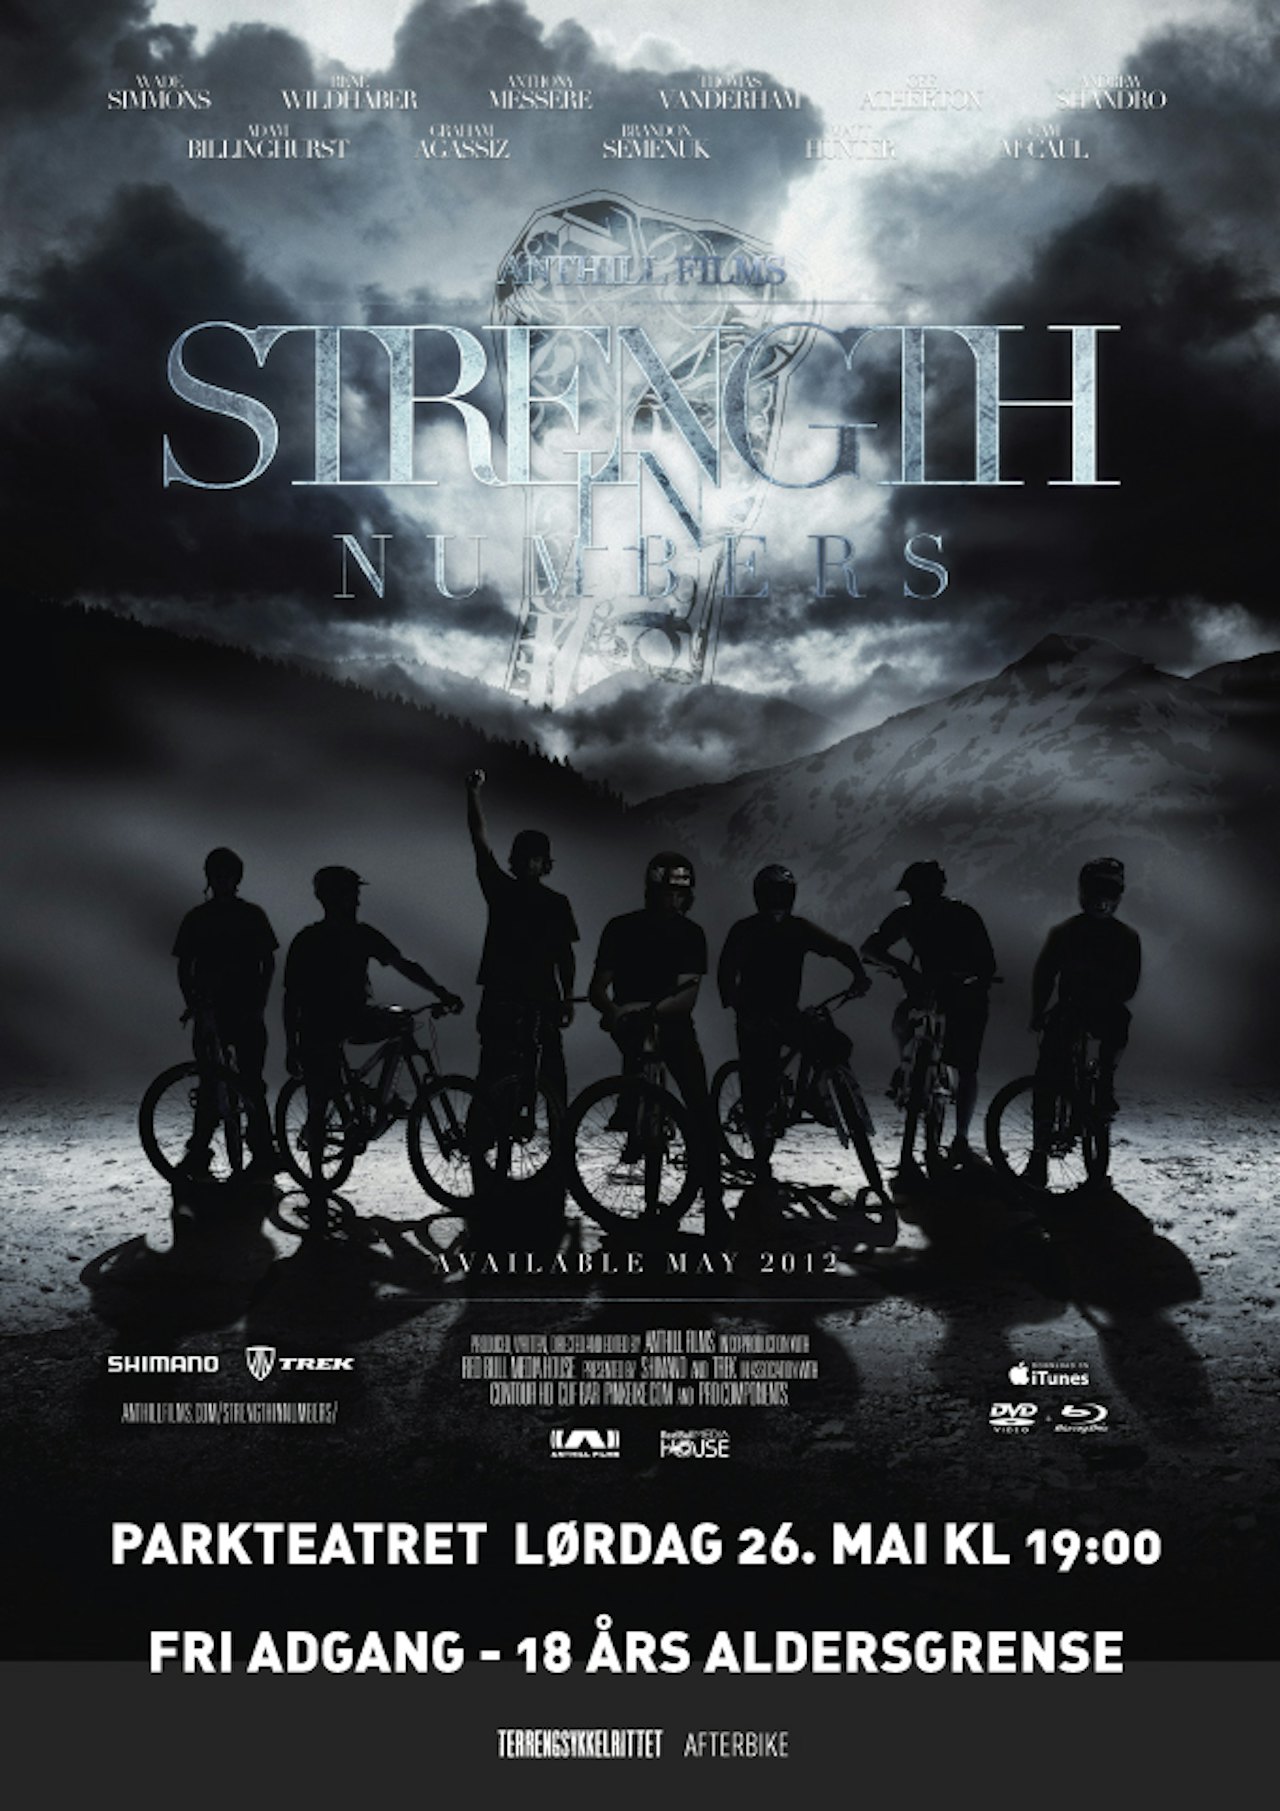 PREMIERE: Storfilmen Strength in Number vises i full HD på Terrengsykkelrittets Afterbike 26. mai.